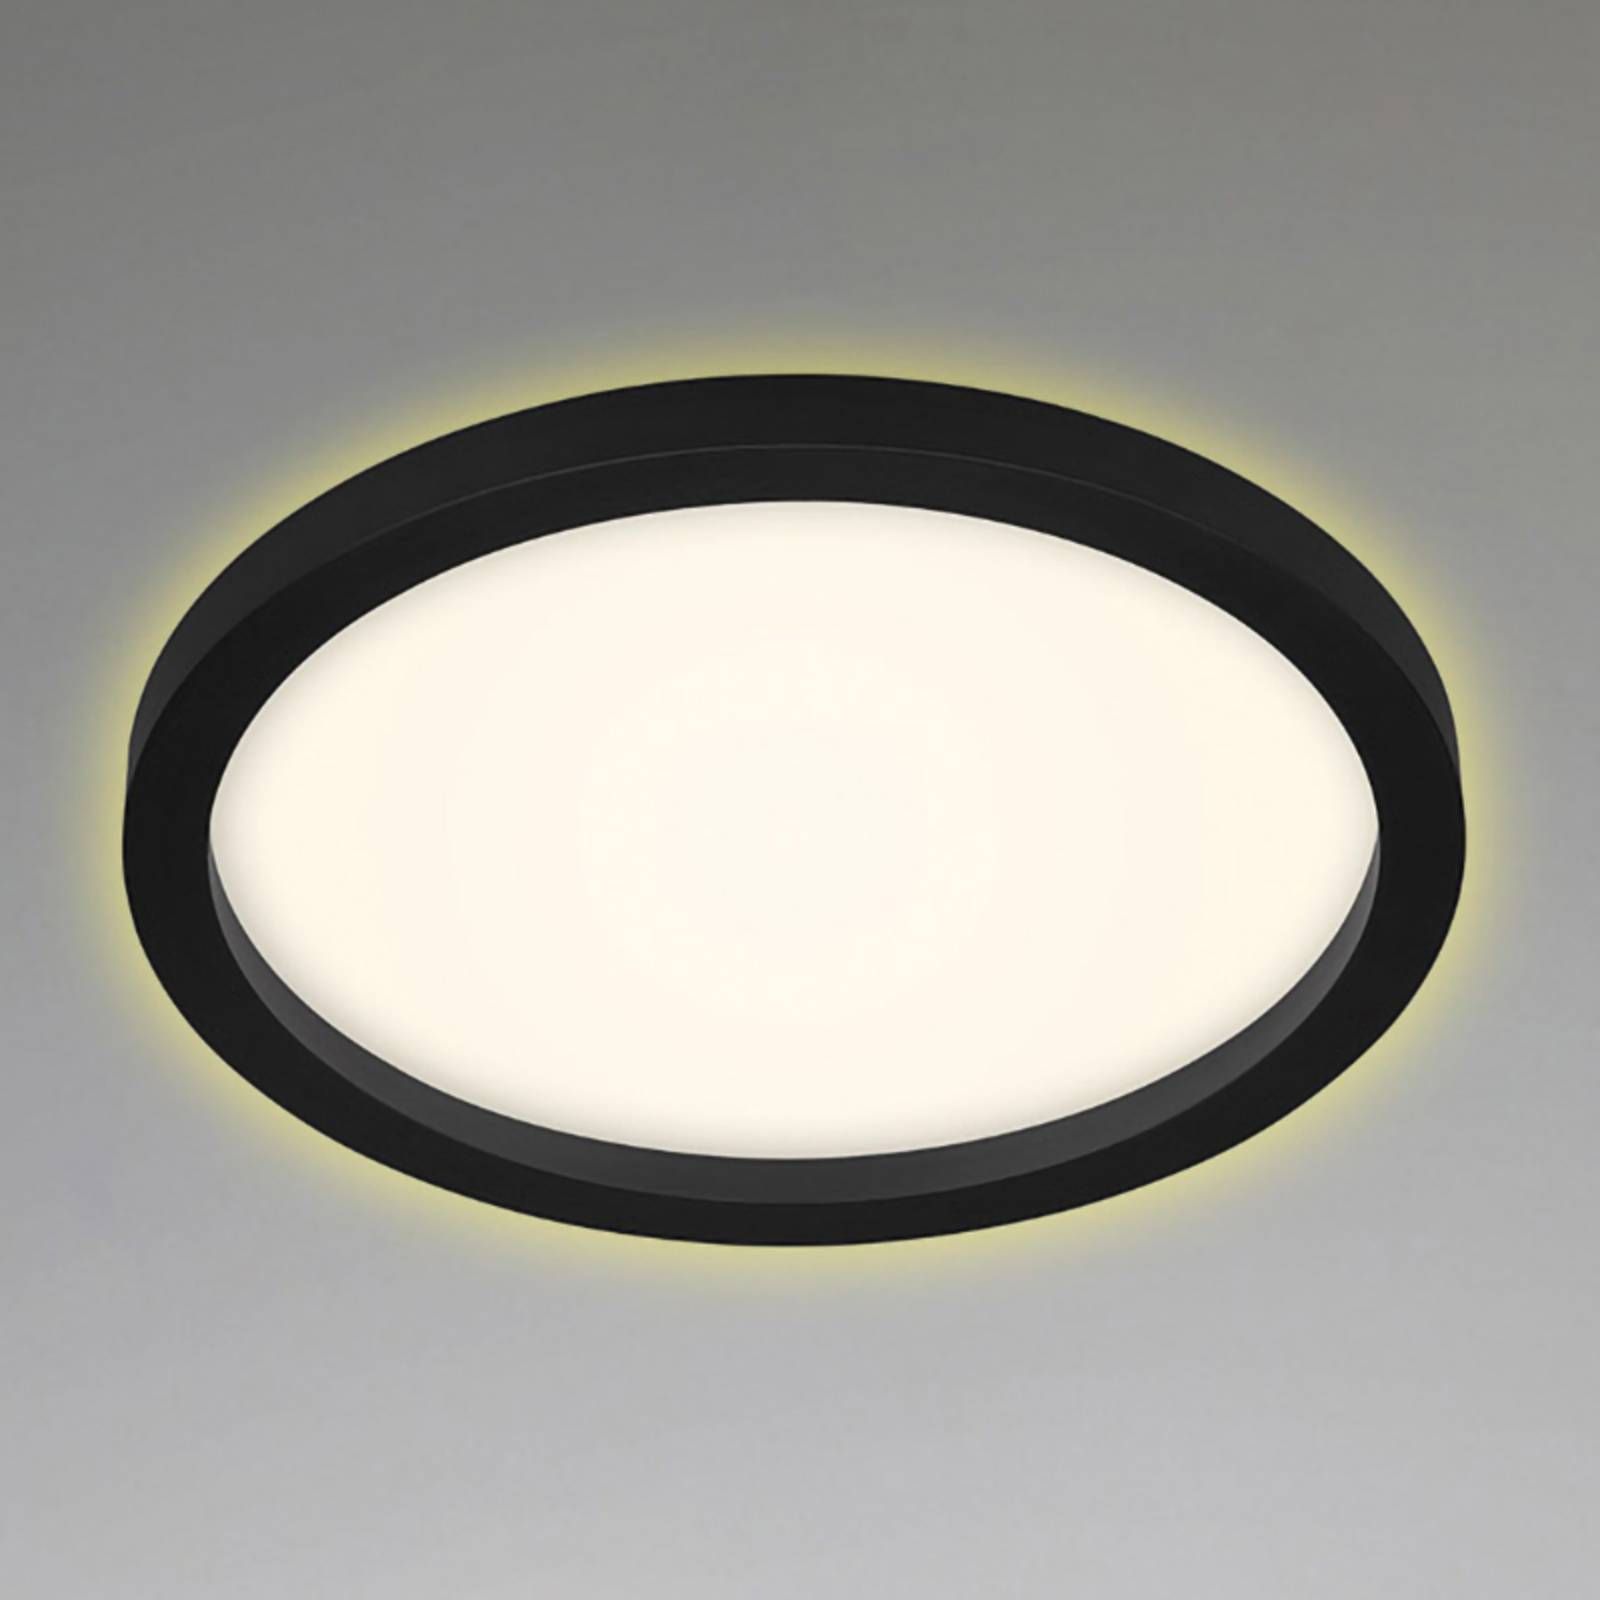 Lampa sufitowa LED 7361, Ø 29 cm, czarna